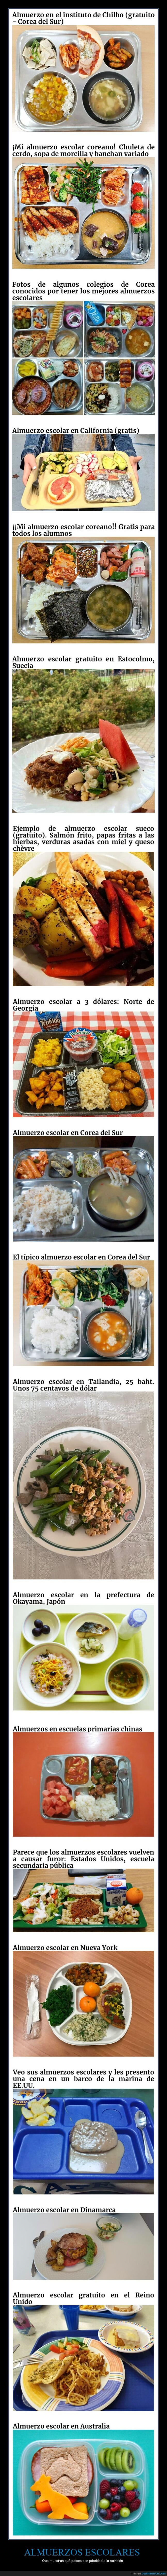 almuerzos escolares,países